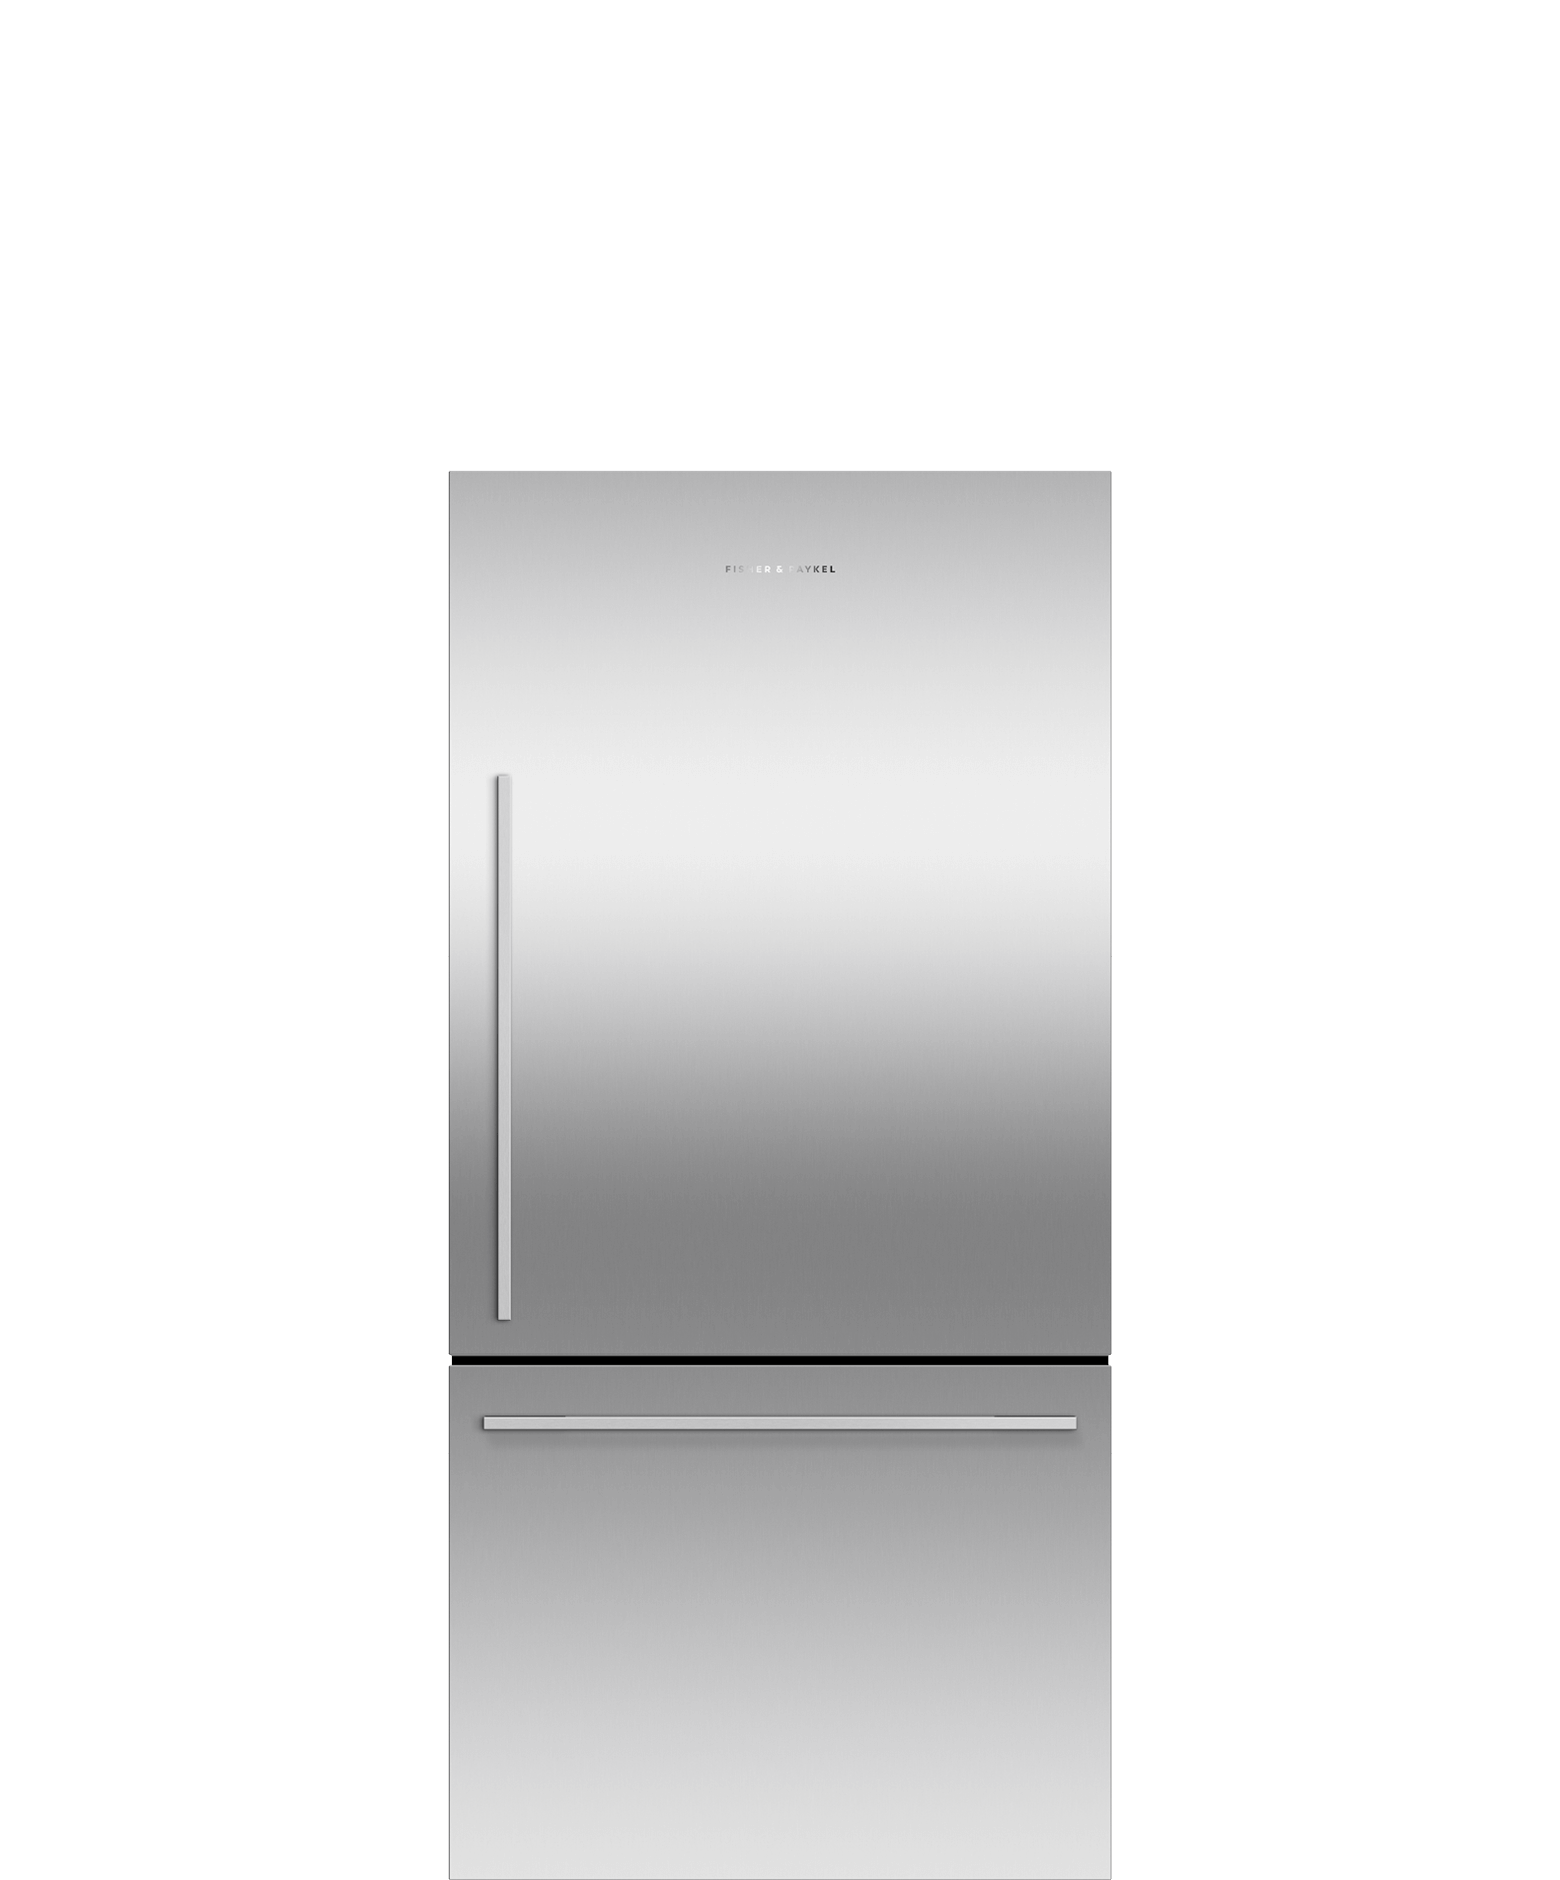 Freestanding Refrigerator Freezer, 79cm, 445L